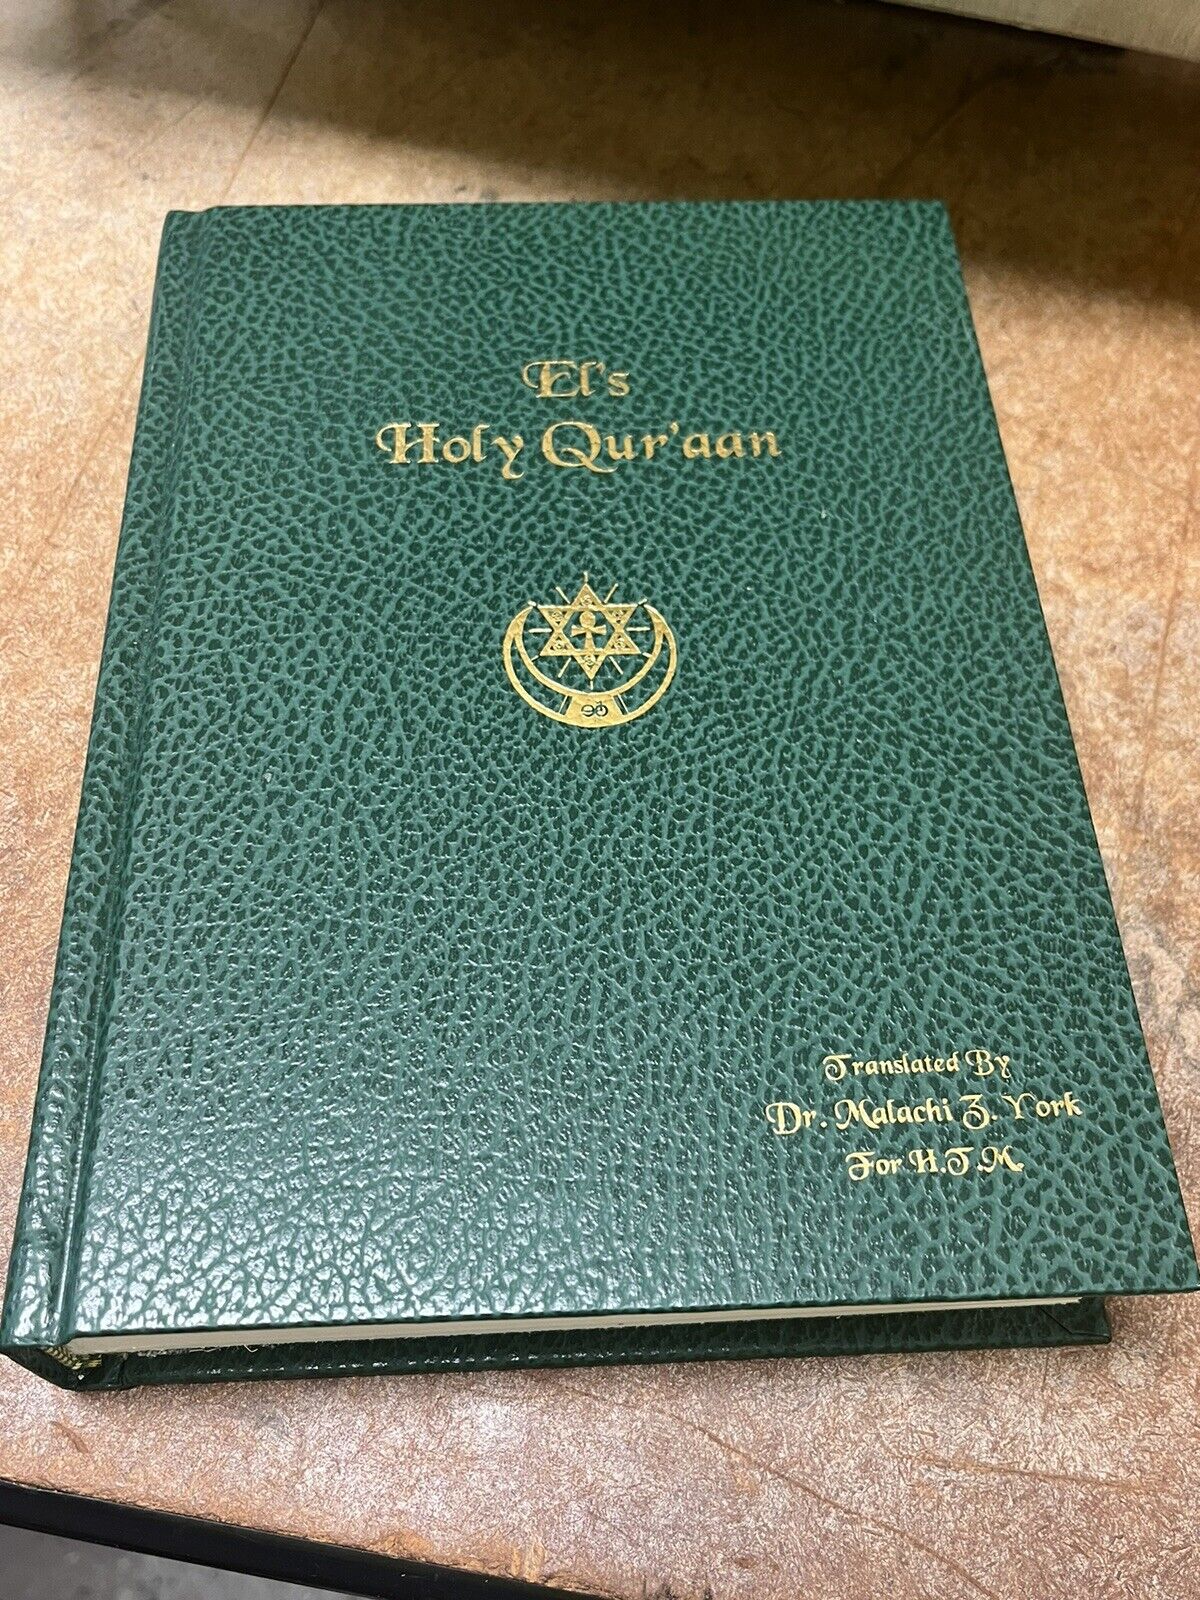 Dr Malachi Z York Translation El's Holy Qur'an, Judah New Koran Qur’aan Original